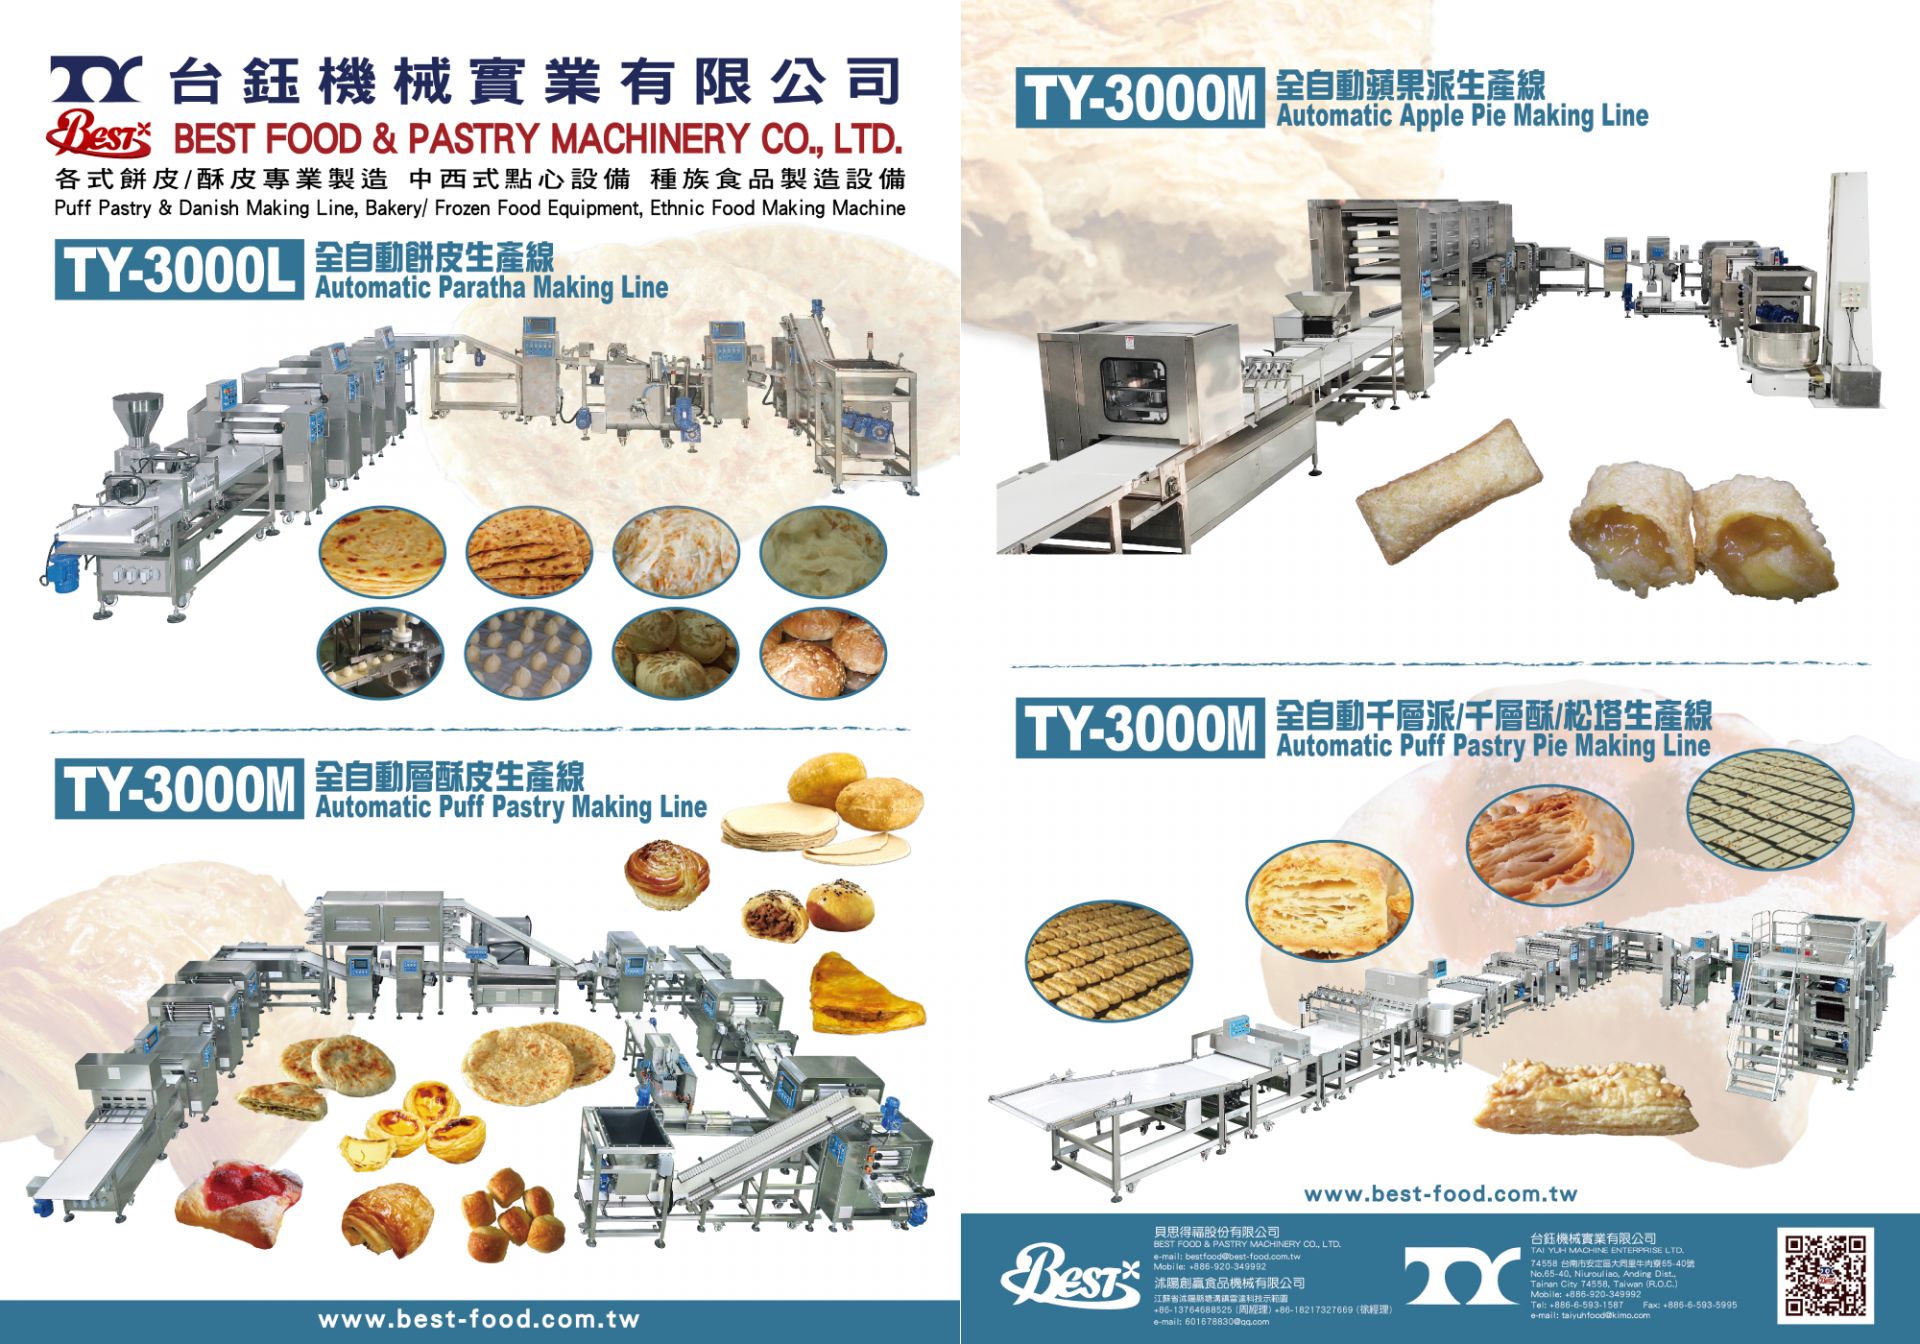 Food Processing Machine Manufacturer - Tai Yuh Machine Enterprise Ltd.